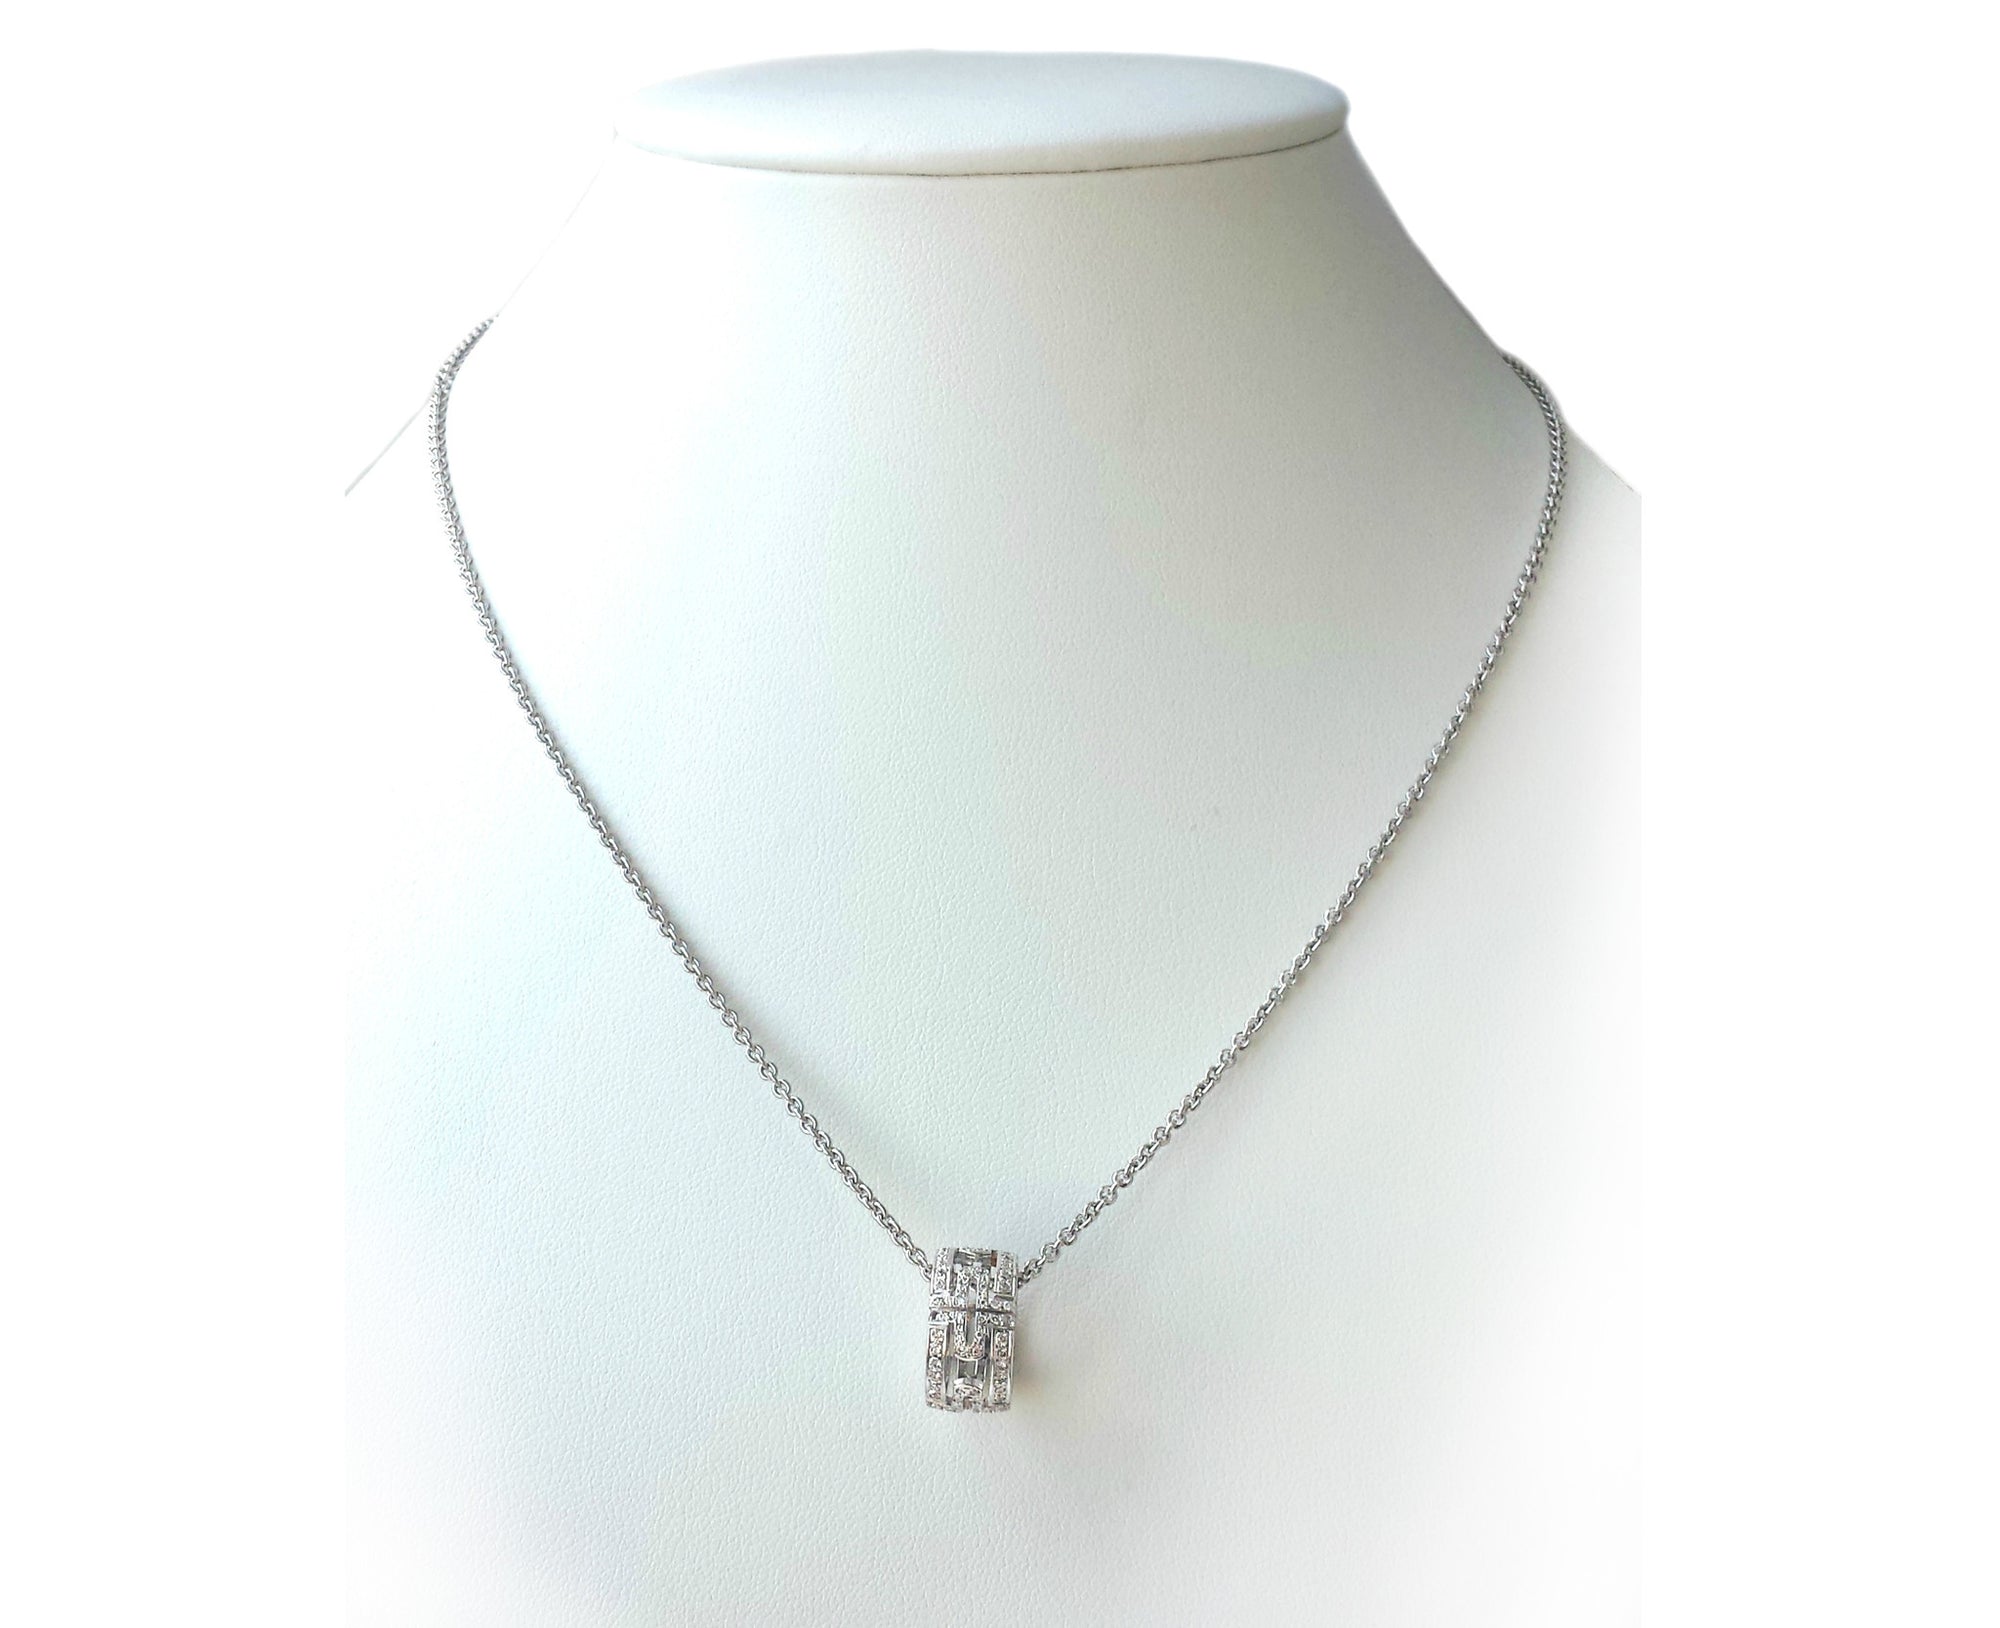 Bulgari Bvlgari Parentesi Diamond Necklace 18k White Gold with Box & Bag